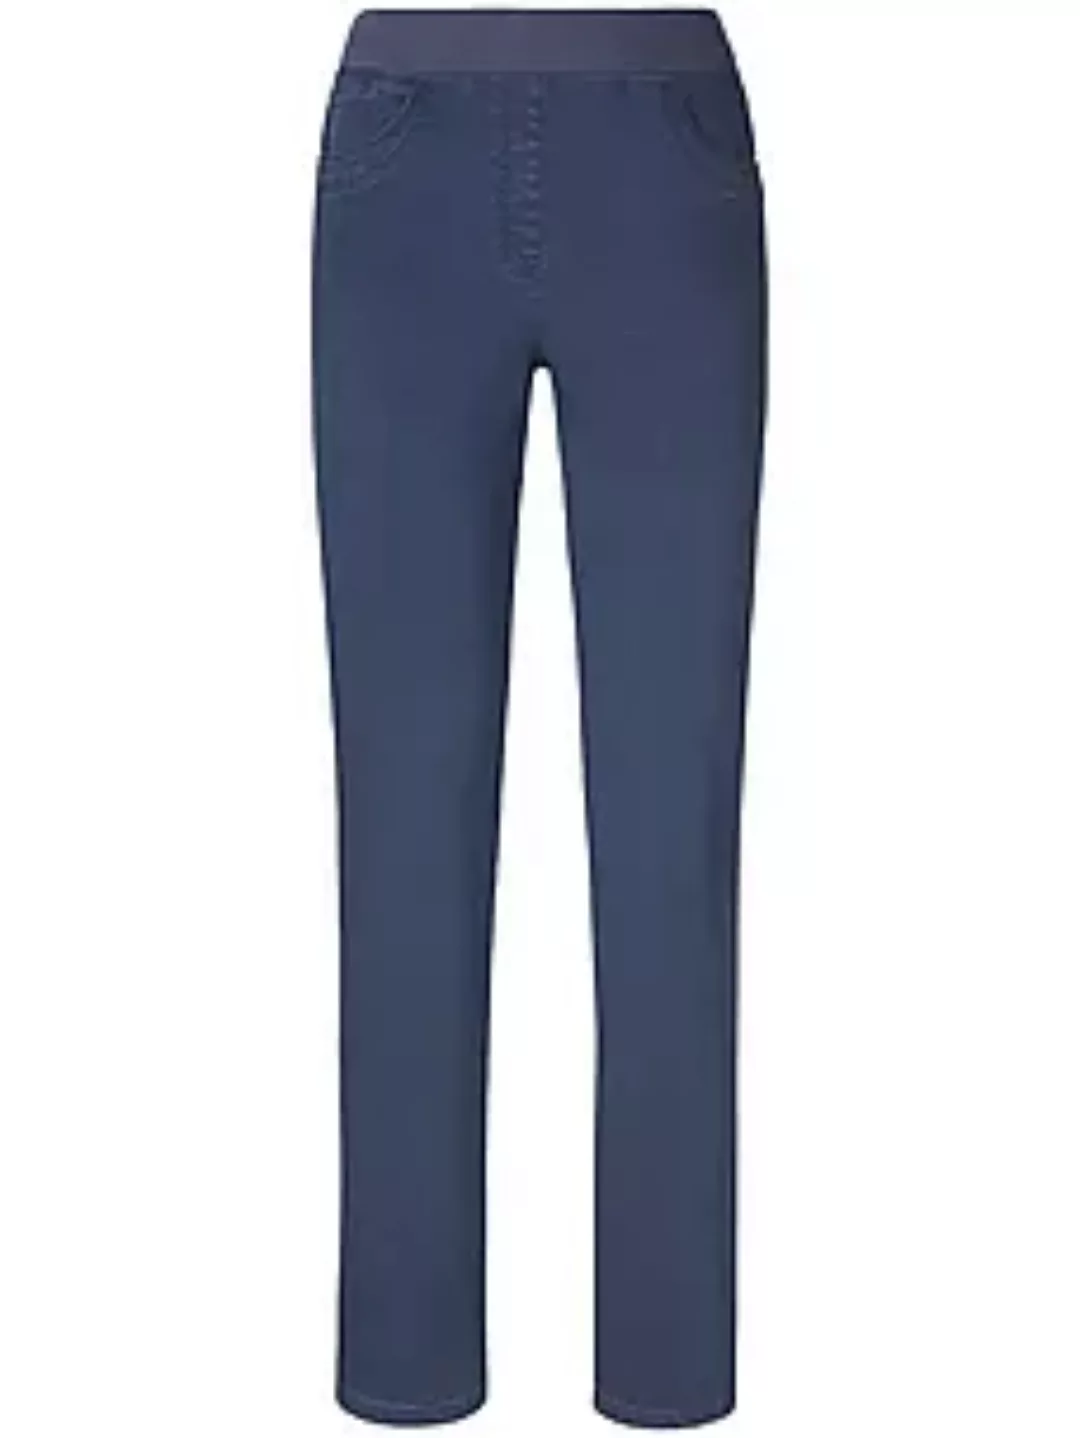 Comfort Plus-Jeans Modell Carina Fun Raphaela by Brax denim günstig online kaufen